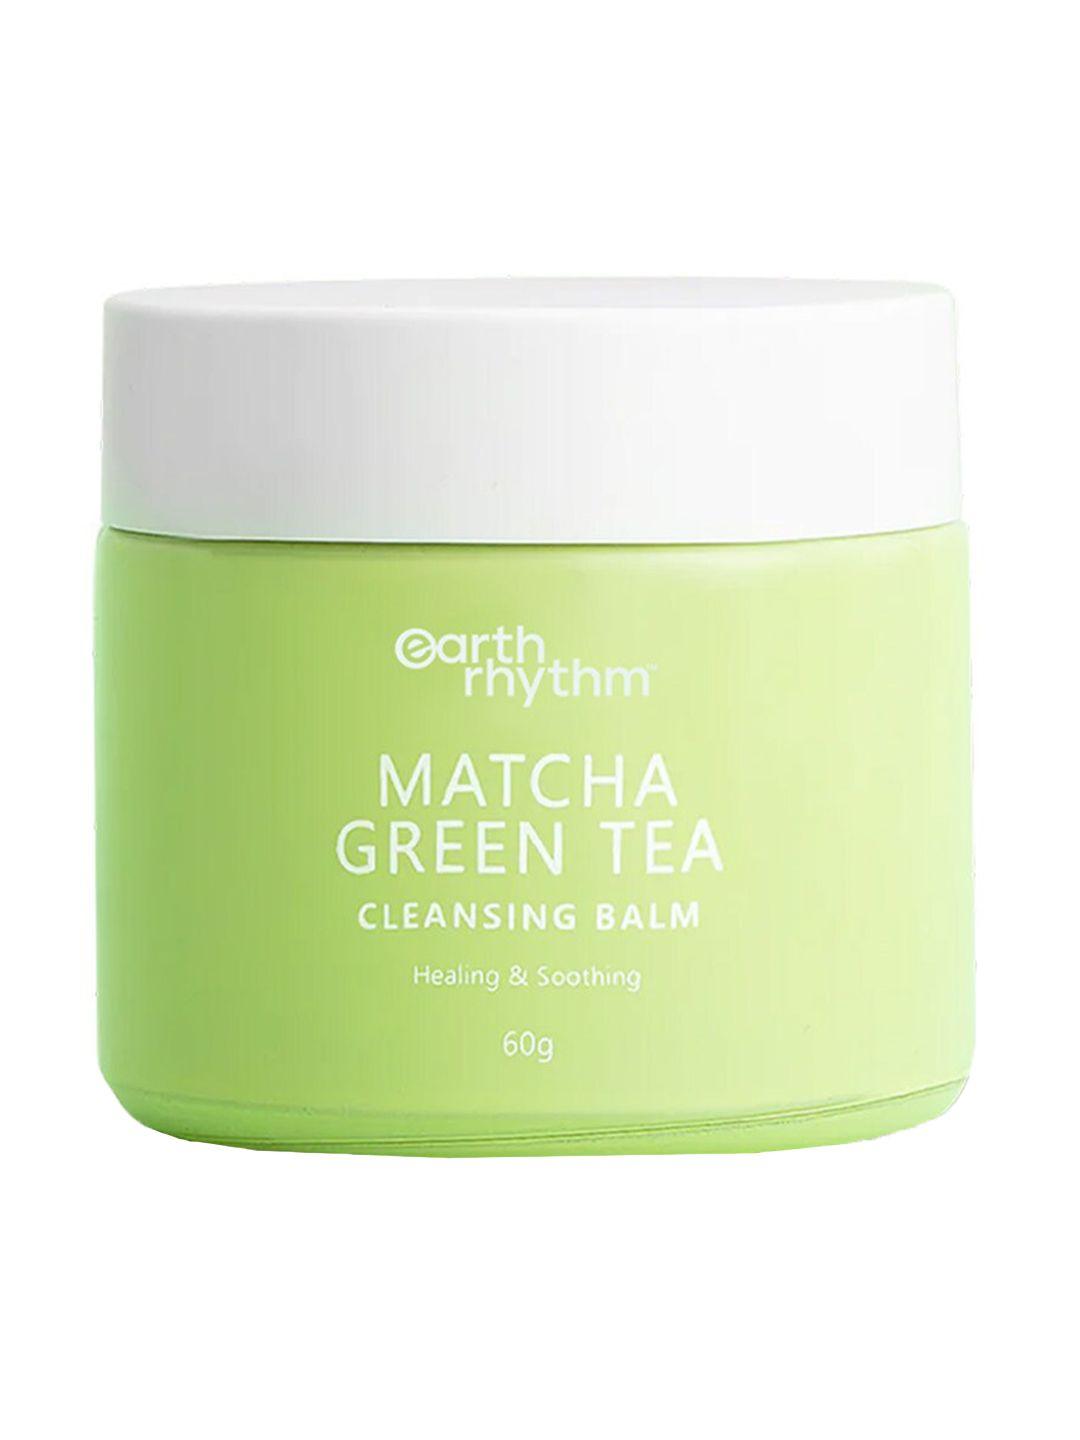 earth rhythm matcha green tea cleansing balm - healing & soothing - 60g